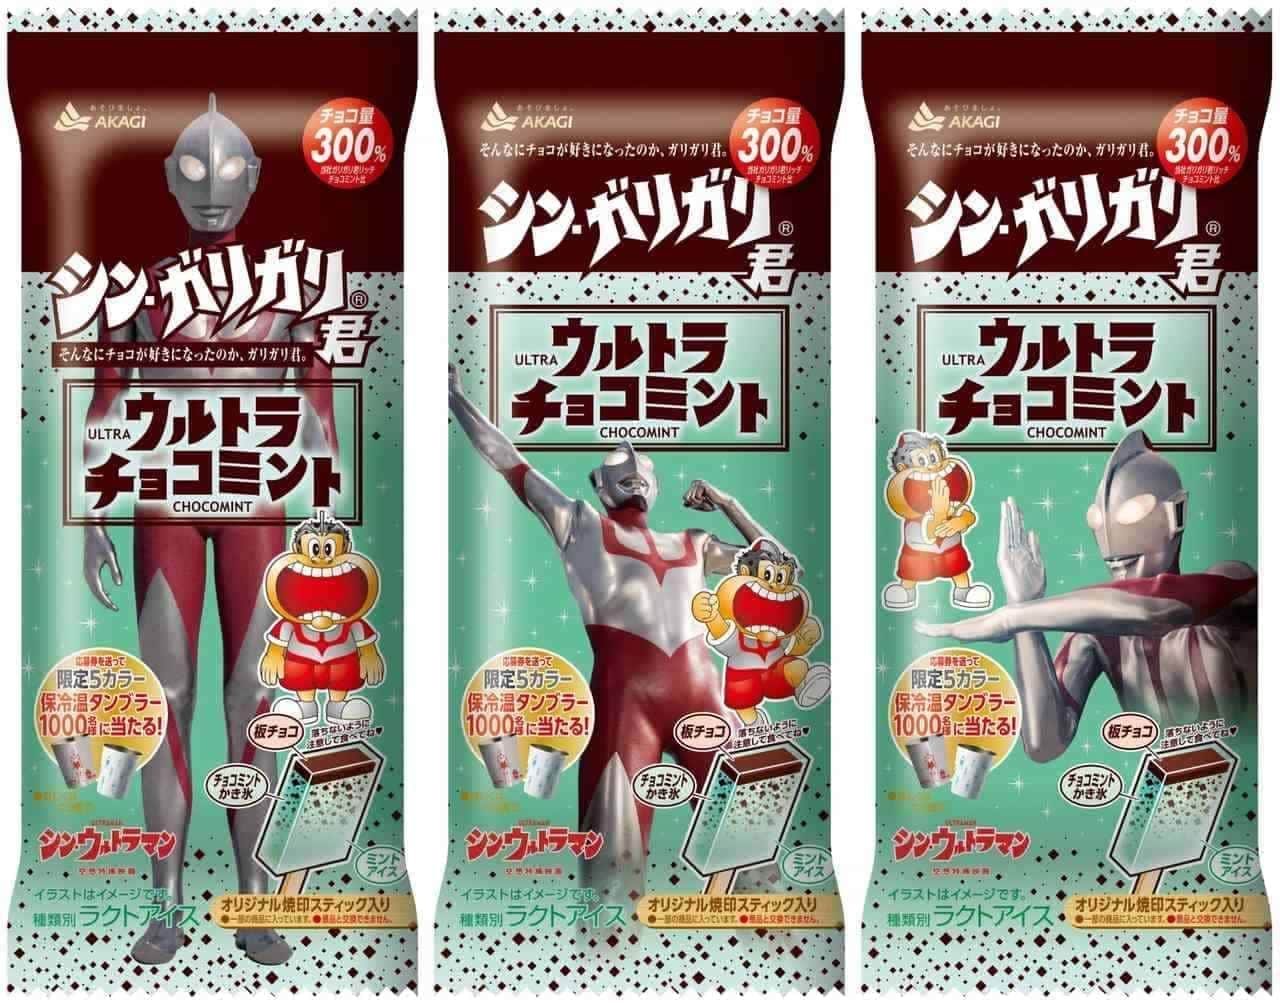 Akagi Nyugyo "Shin Garigari-kun Ultra Choco Mint